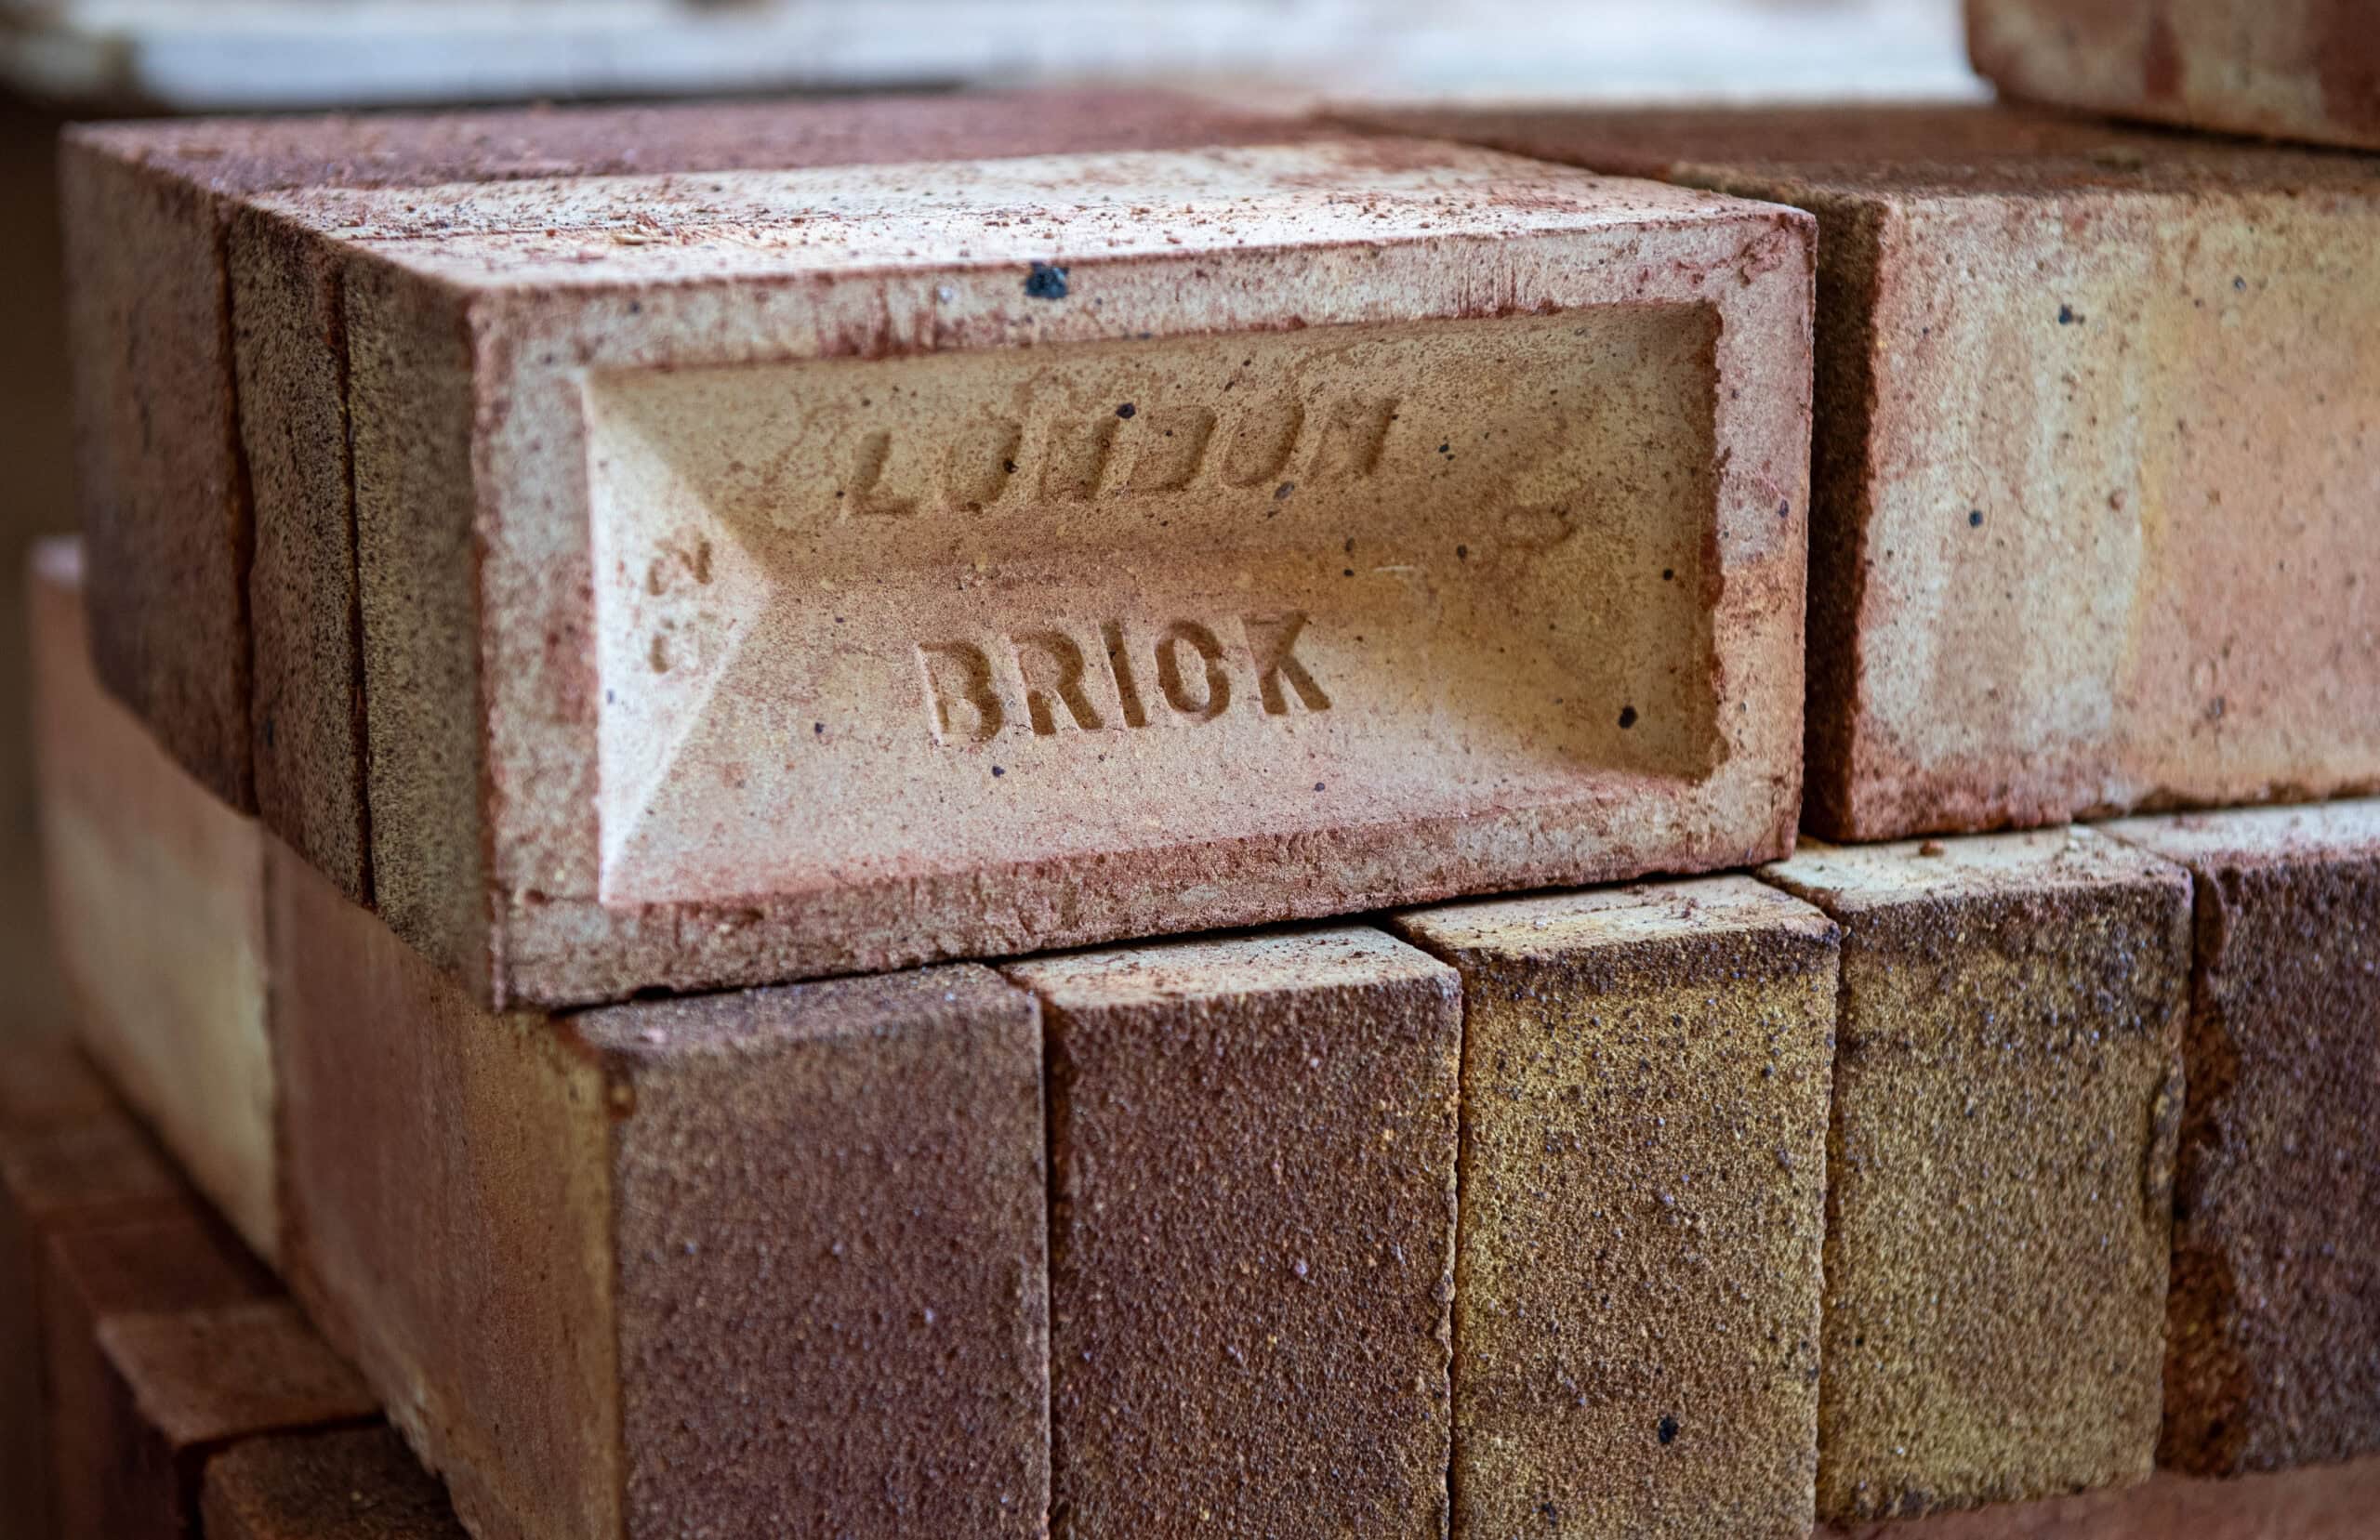 London bricks from Forterra